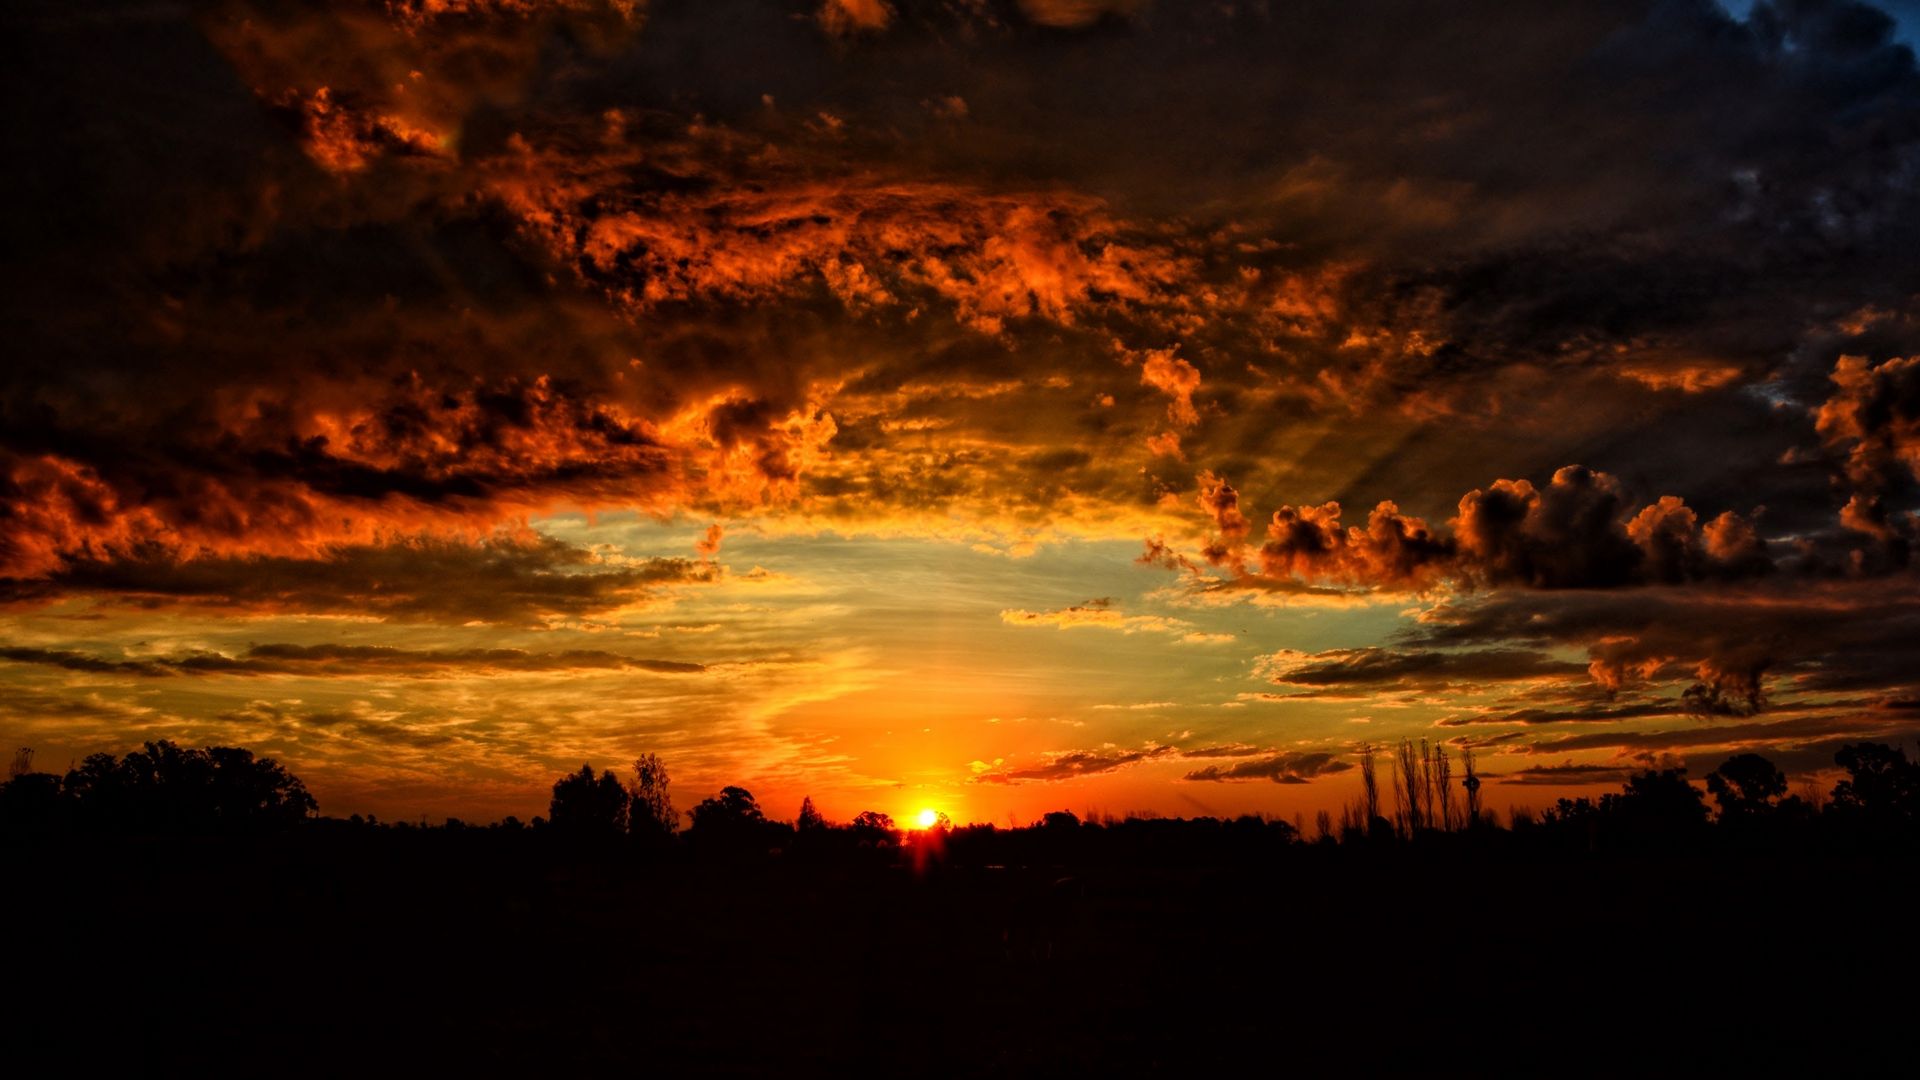 Download wallpaper 1920x1080 sunset, clouds, orange sky full HD